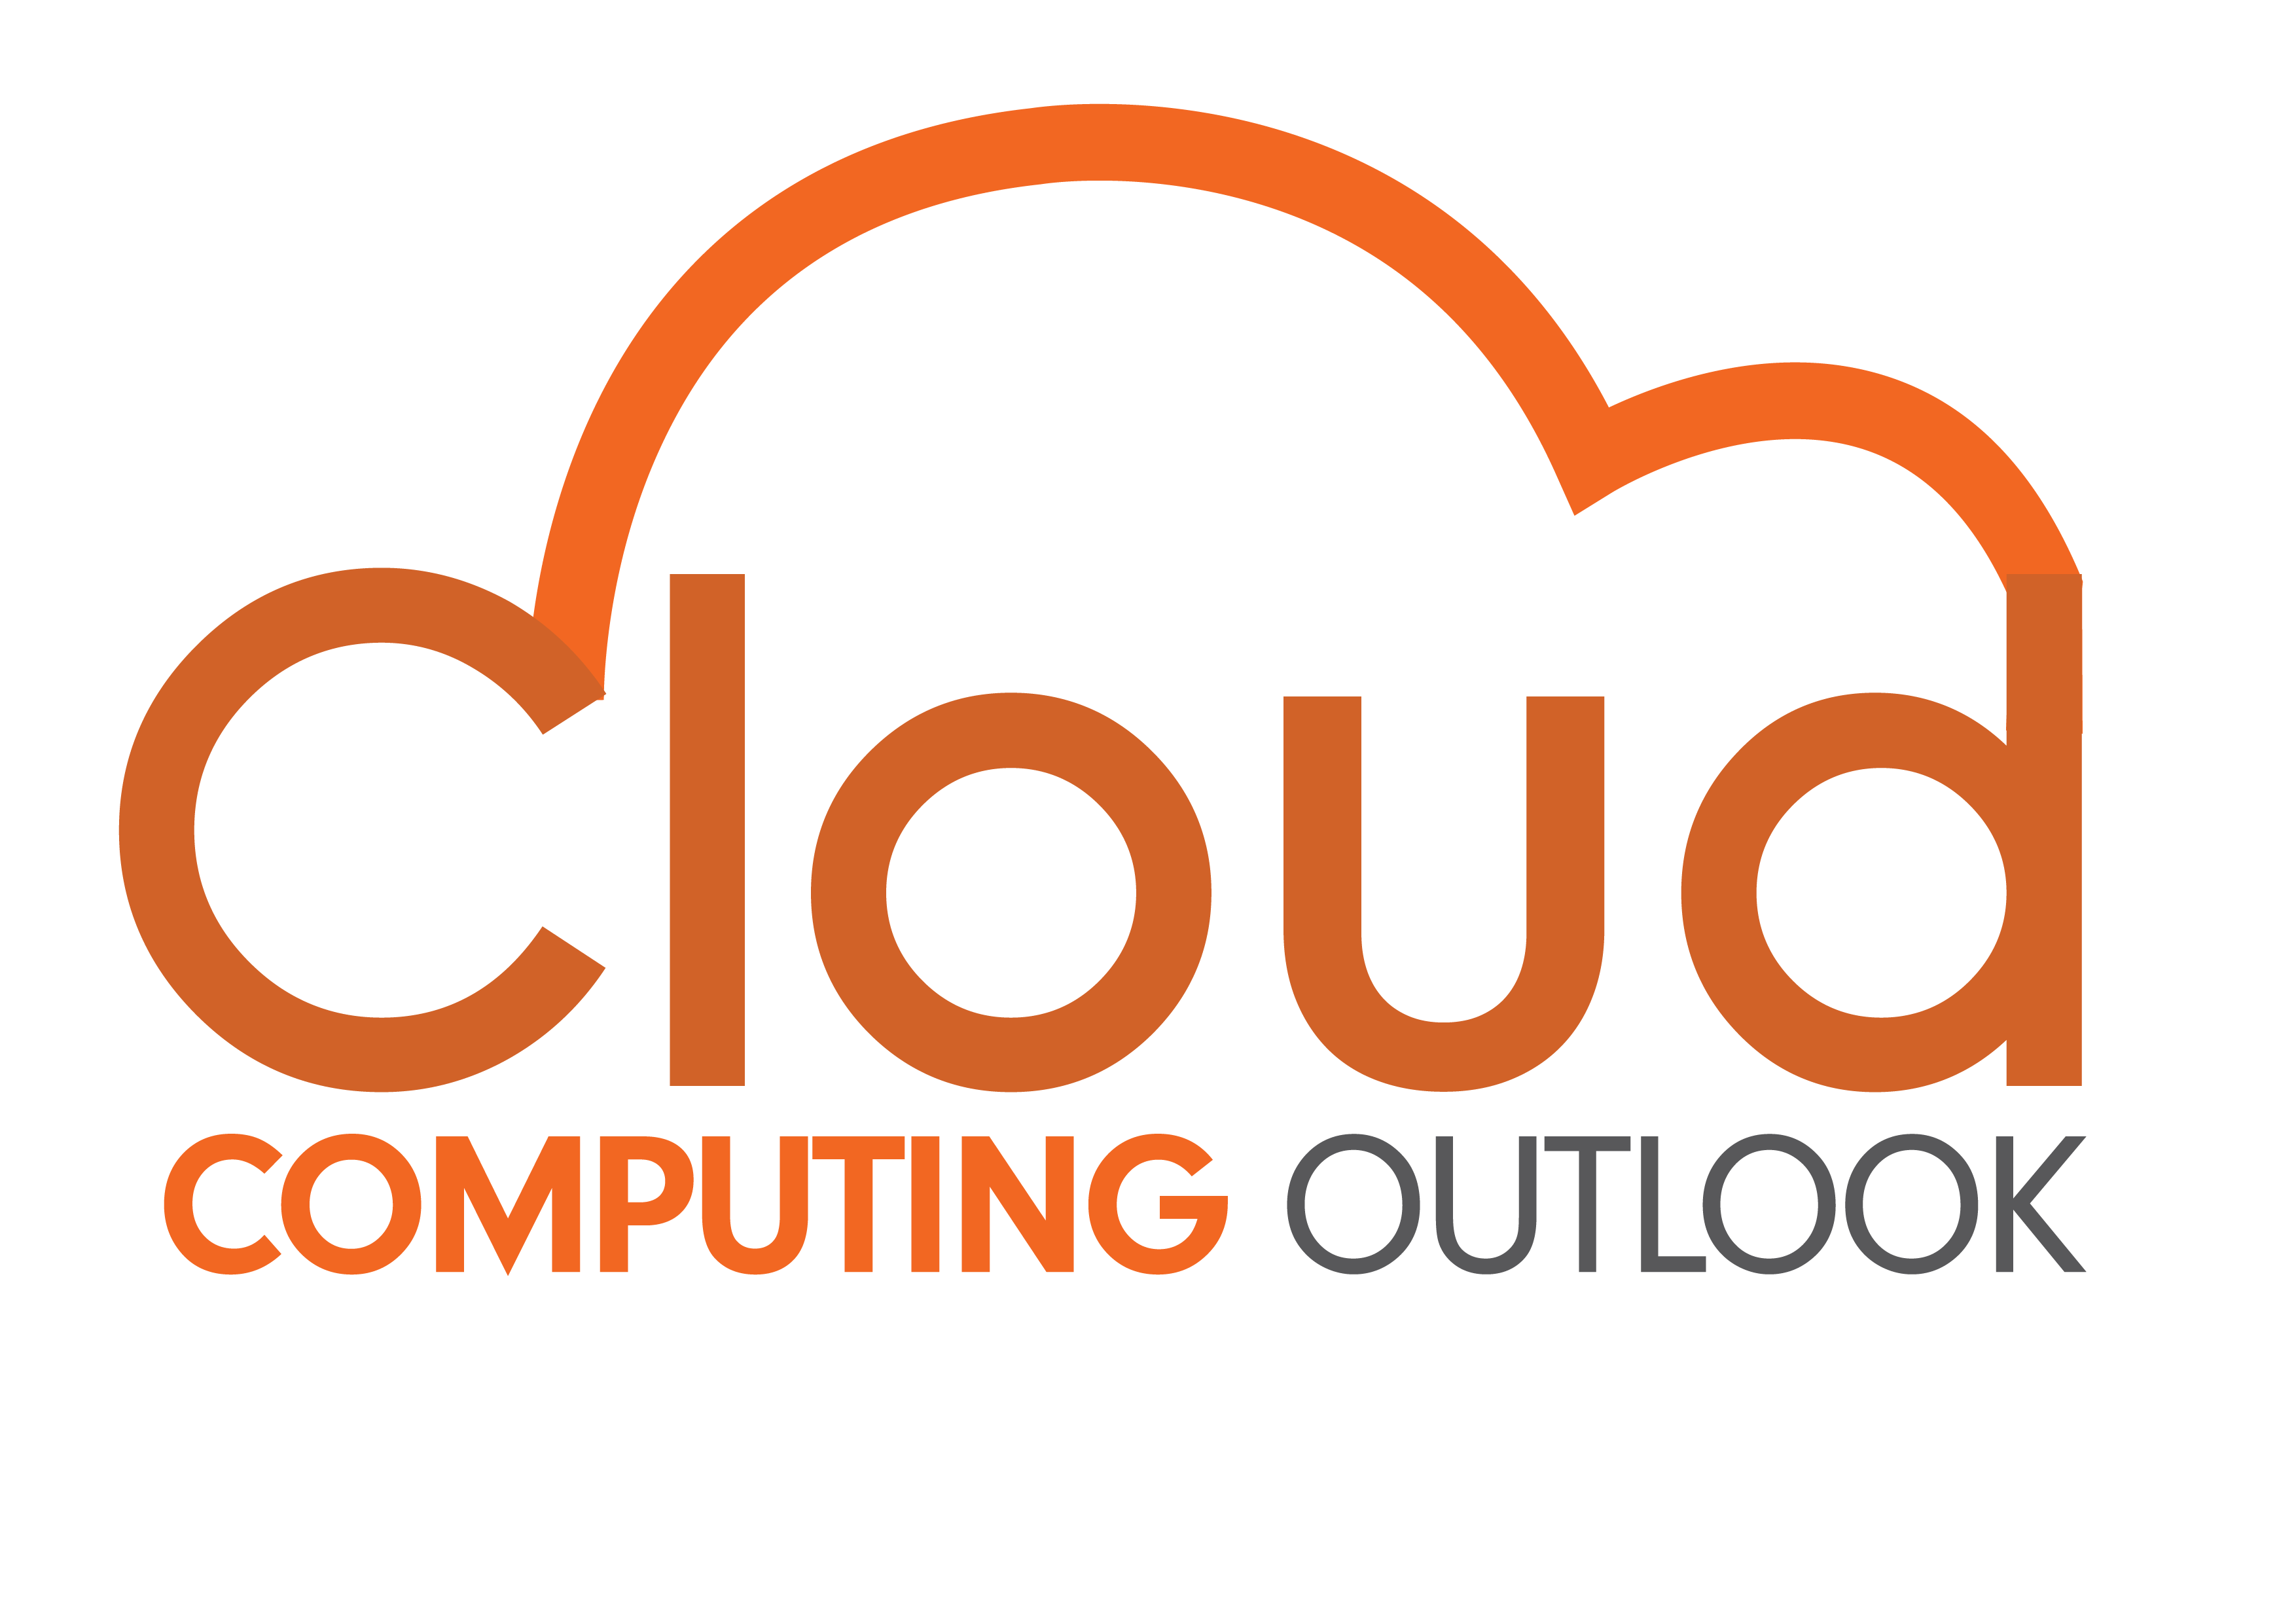 cloudcomputingoutlook